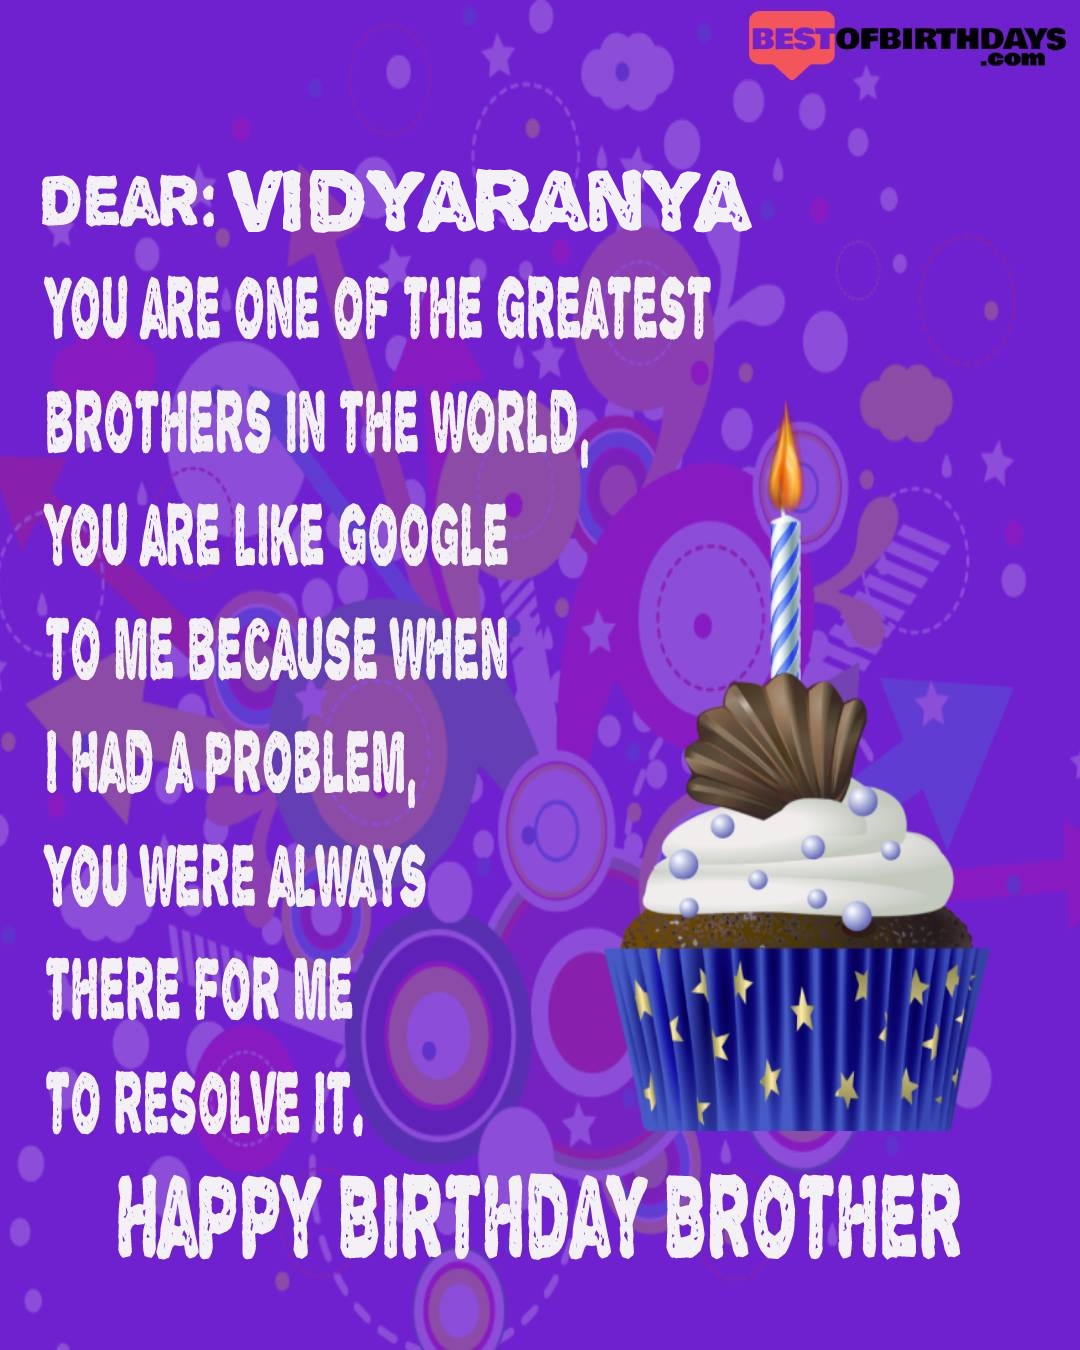 Happy birthday vidyaranya bhai brother bro